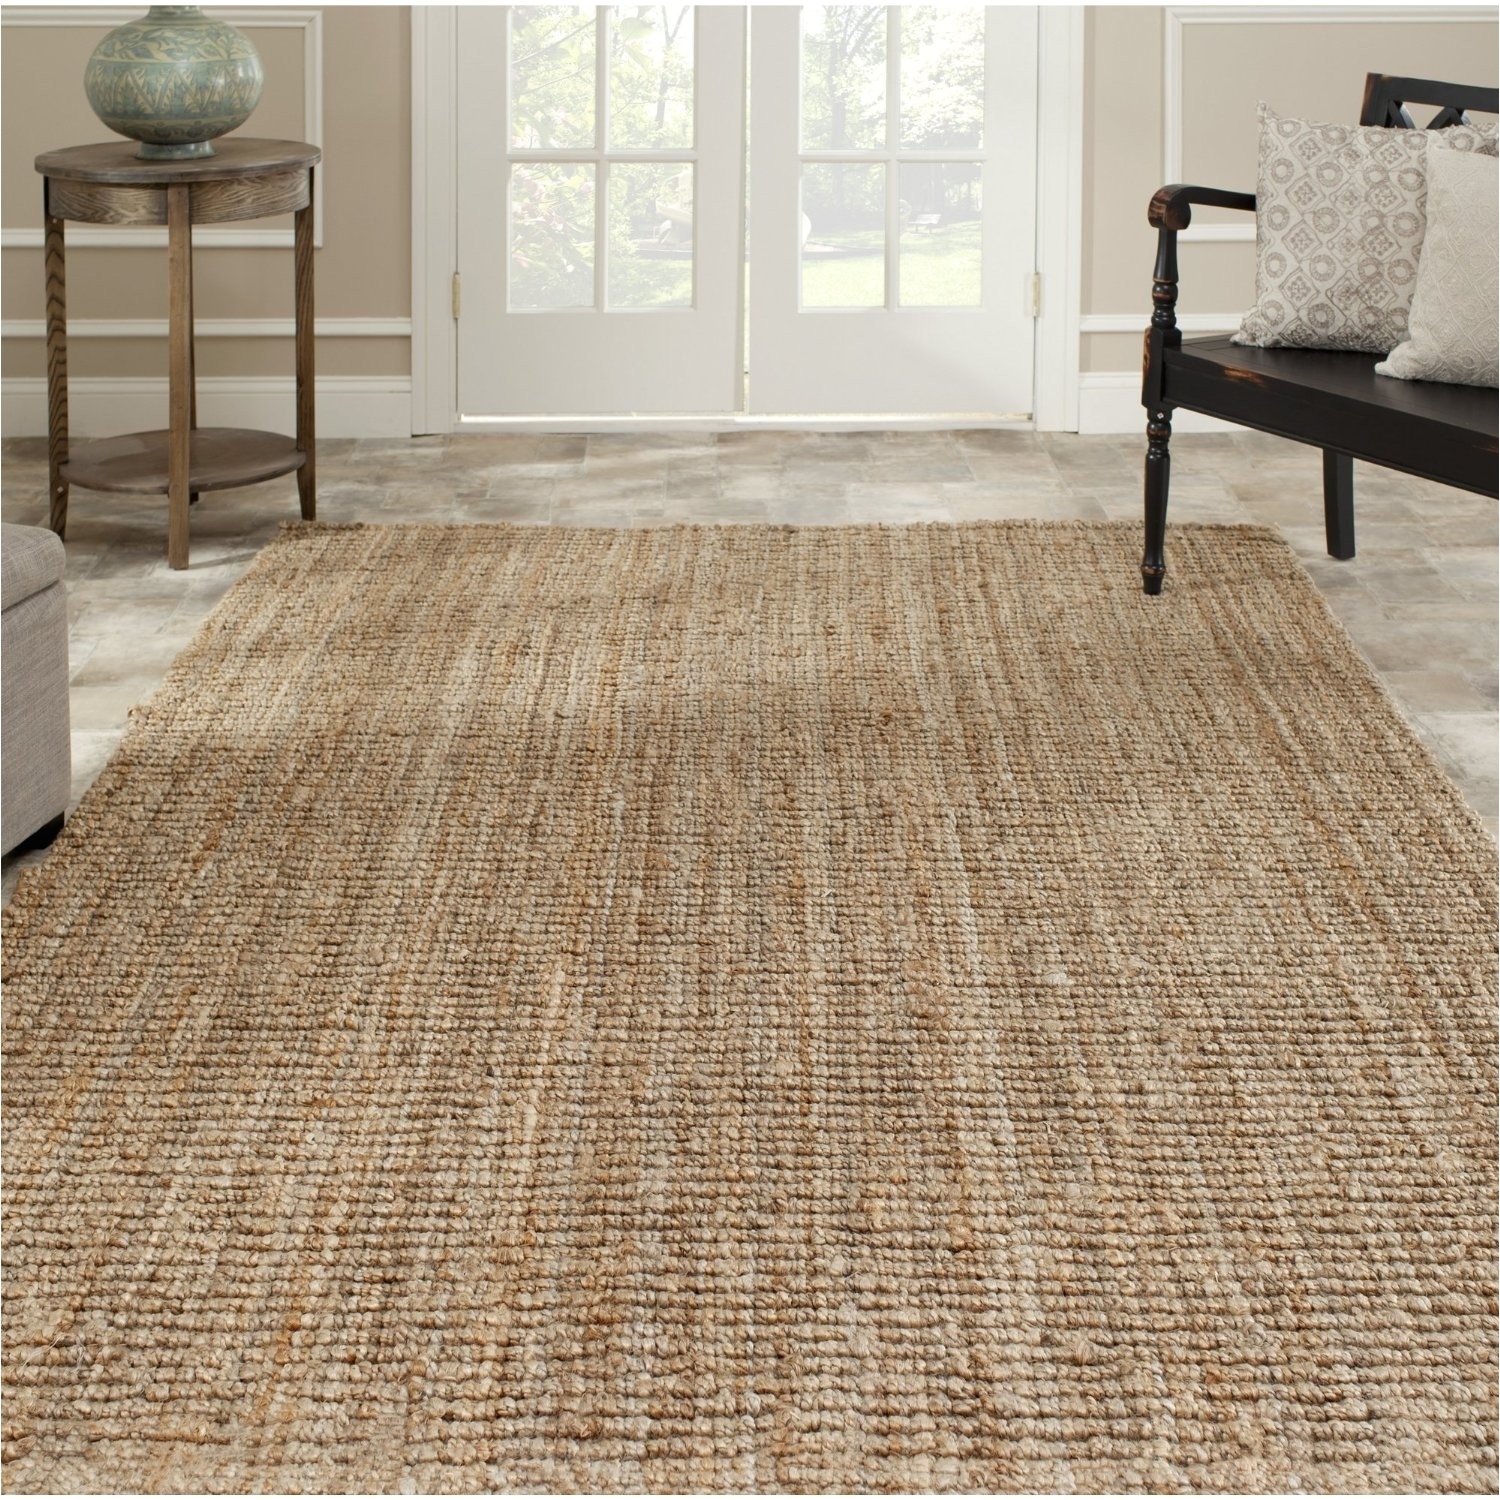 luxury carpet choice rugs innovative design rectangle area rugs the home depot spotlight home depot sisal